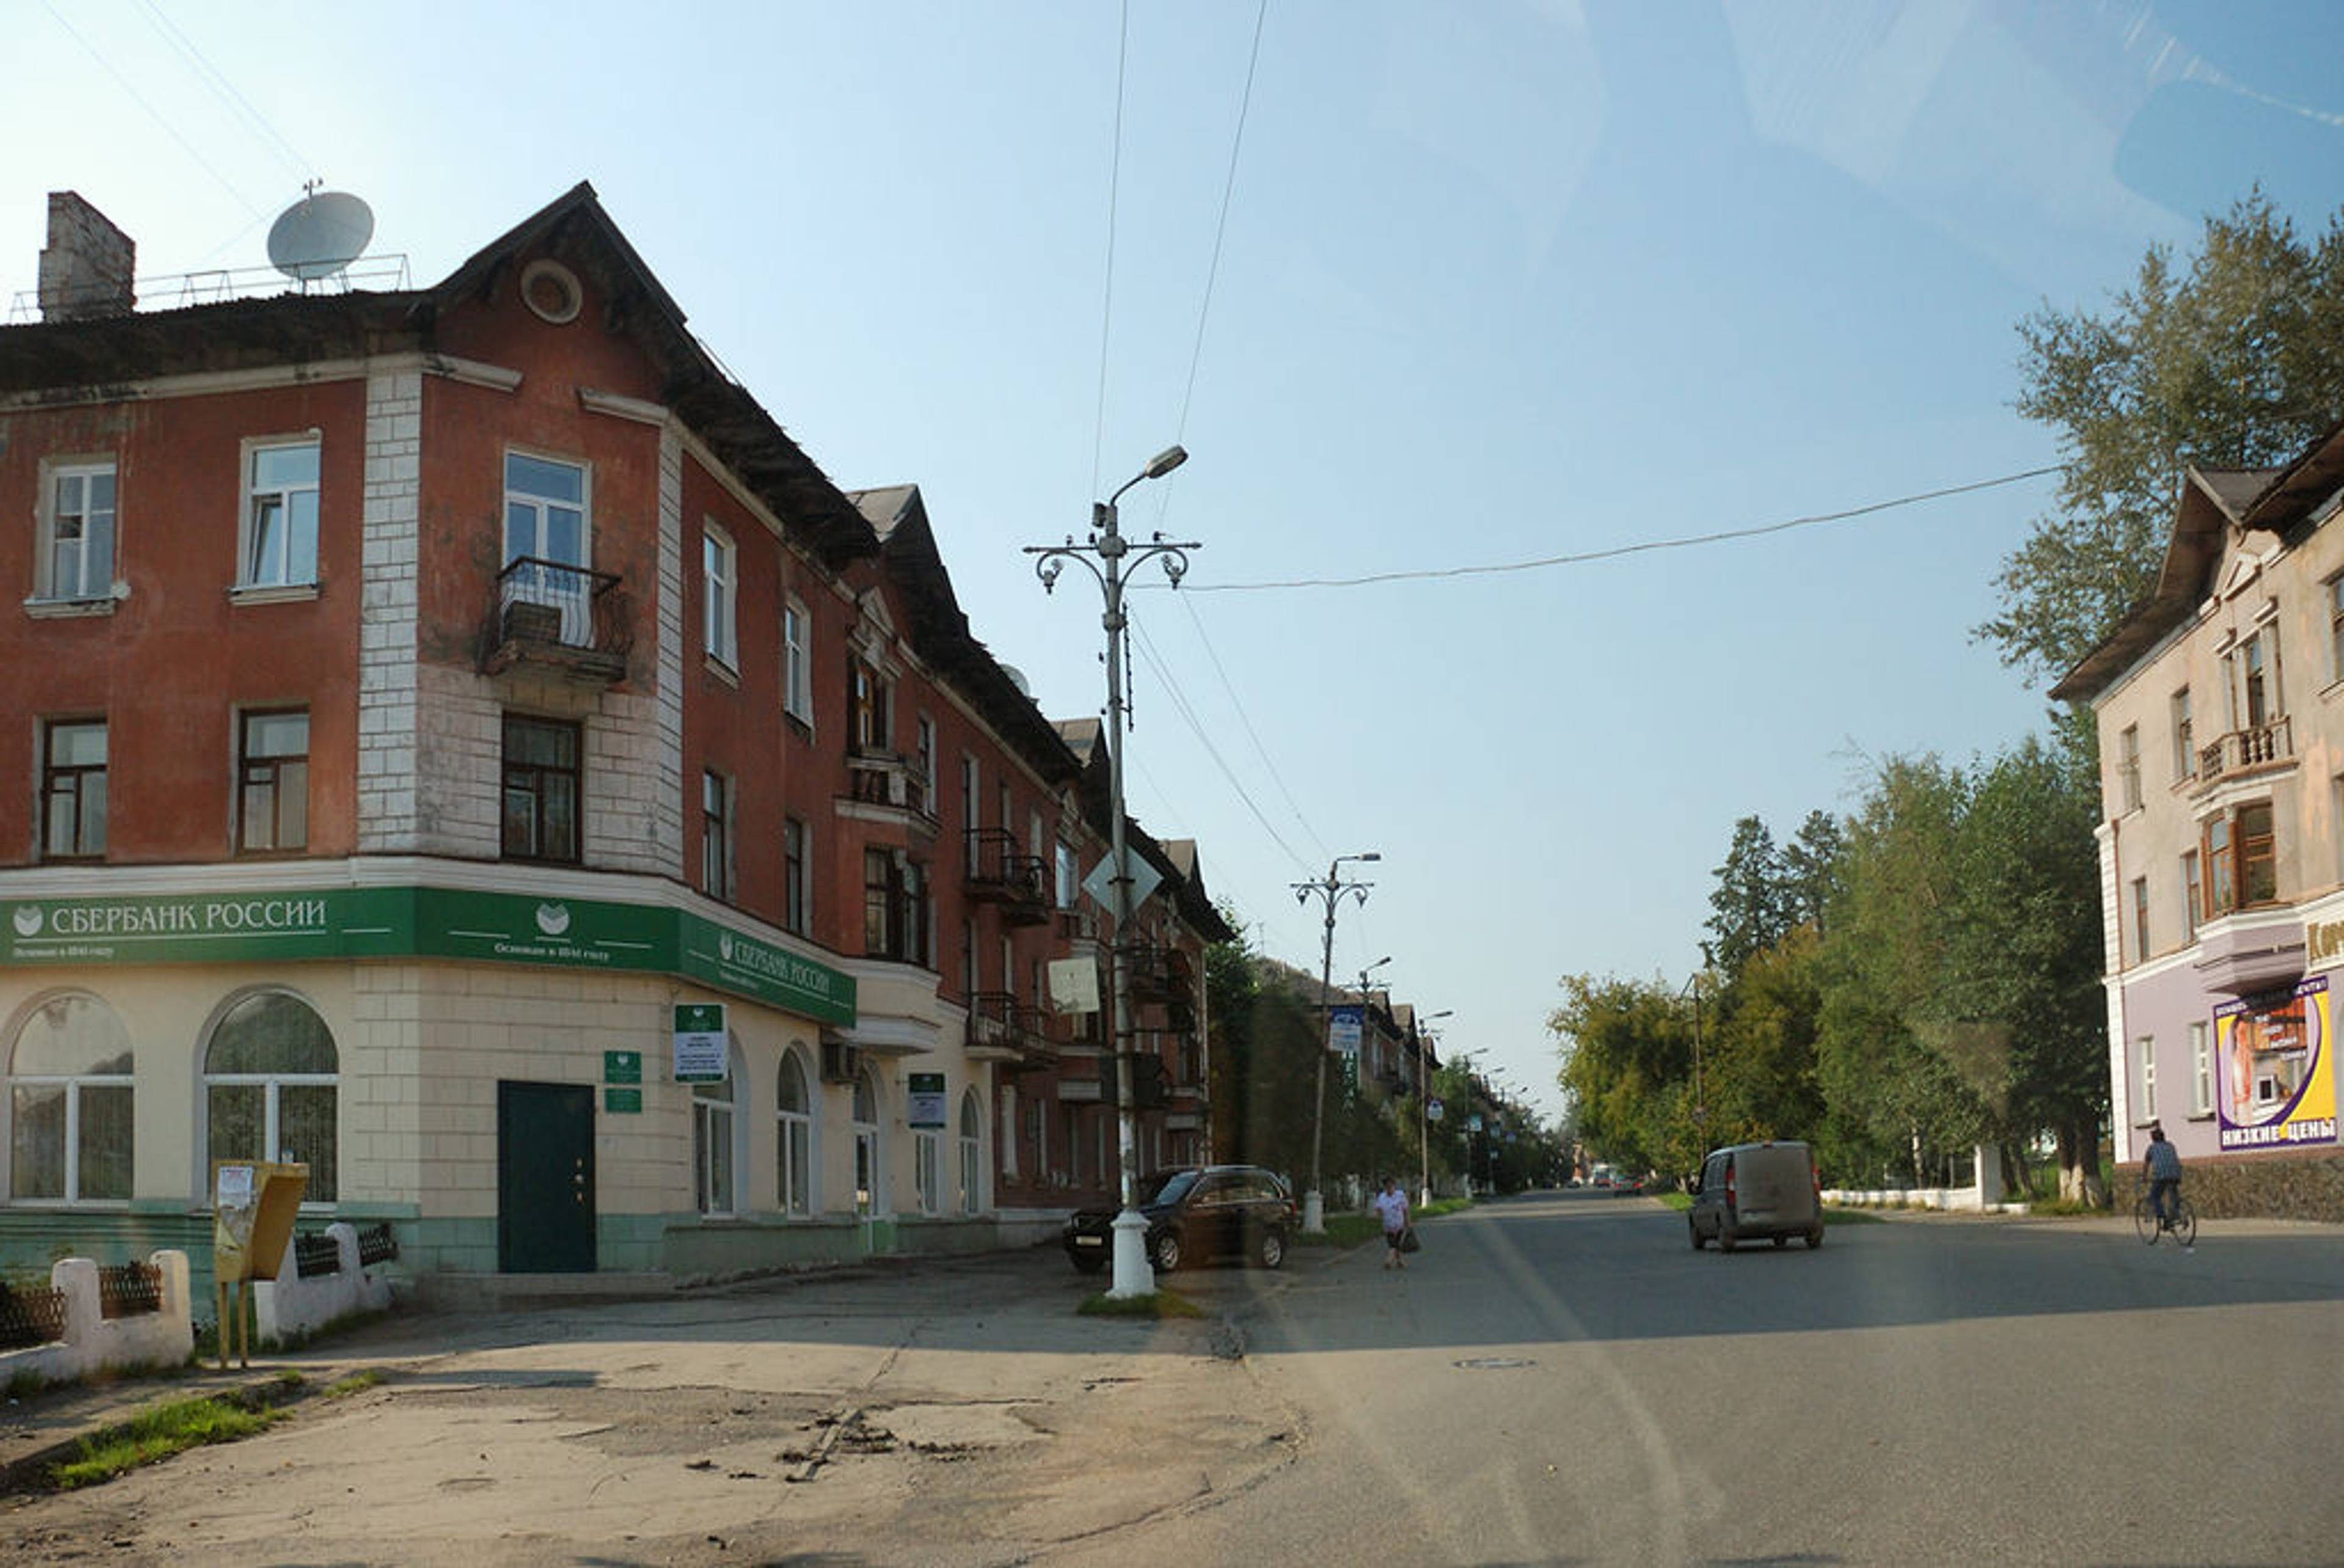 Old Town in Chusovoi